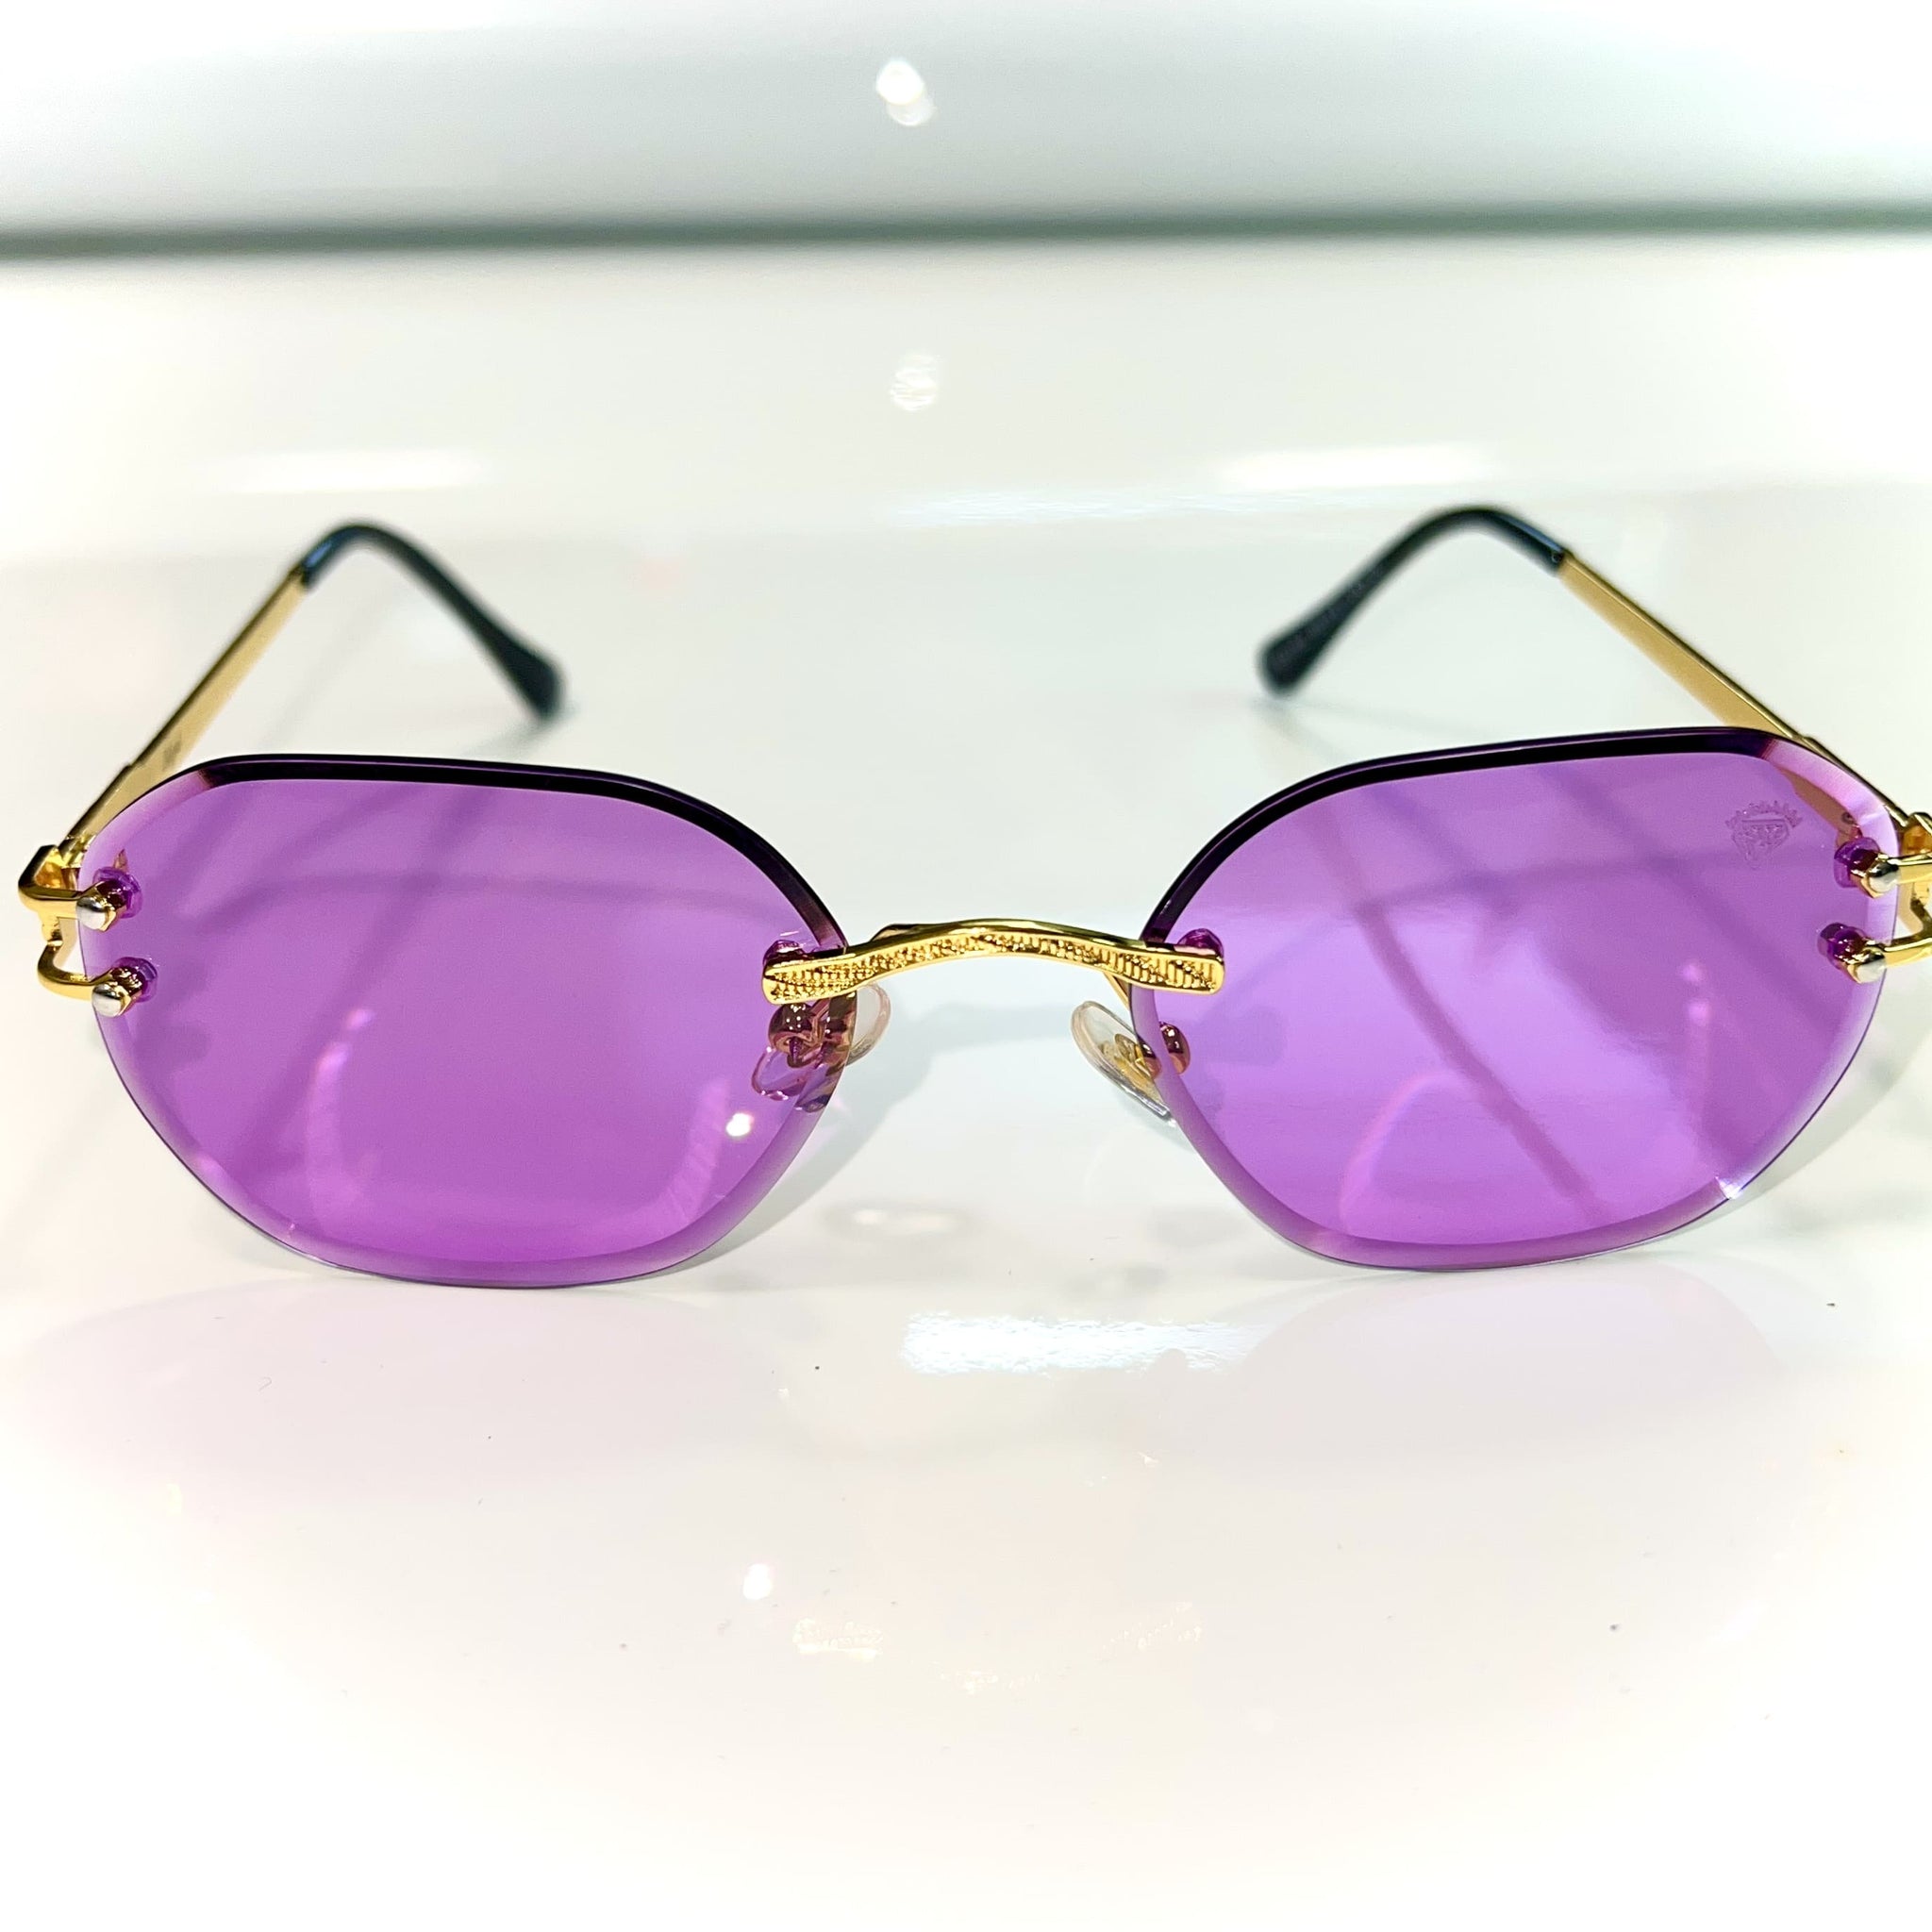 Pharaoh Glasses - Diamond cut / 14 carat gold plated - Purple Shade - Sehgal Glasses